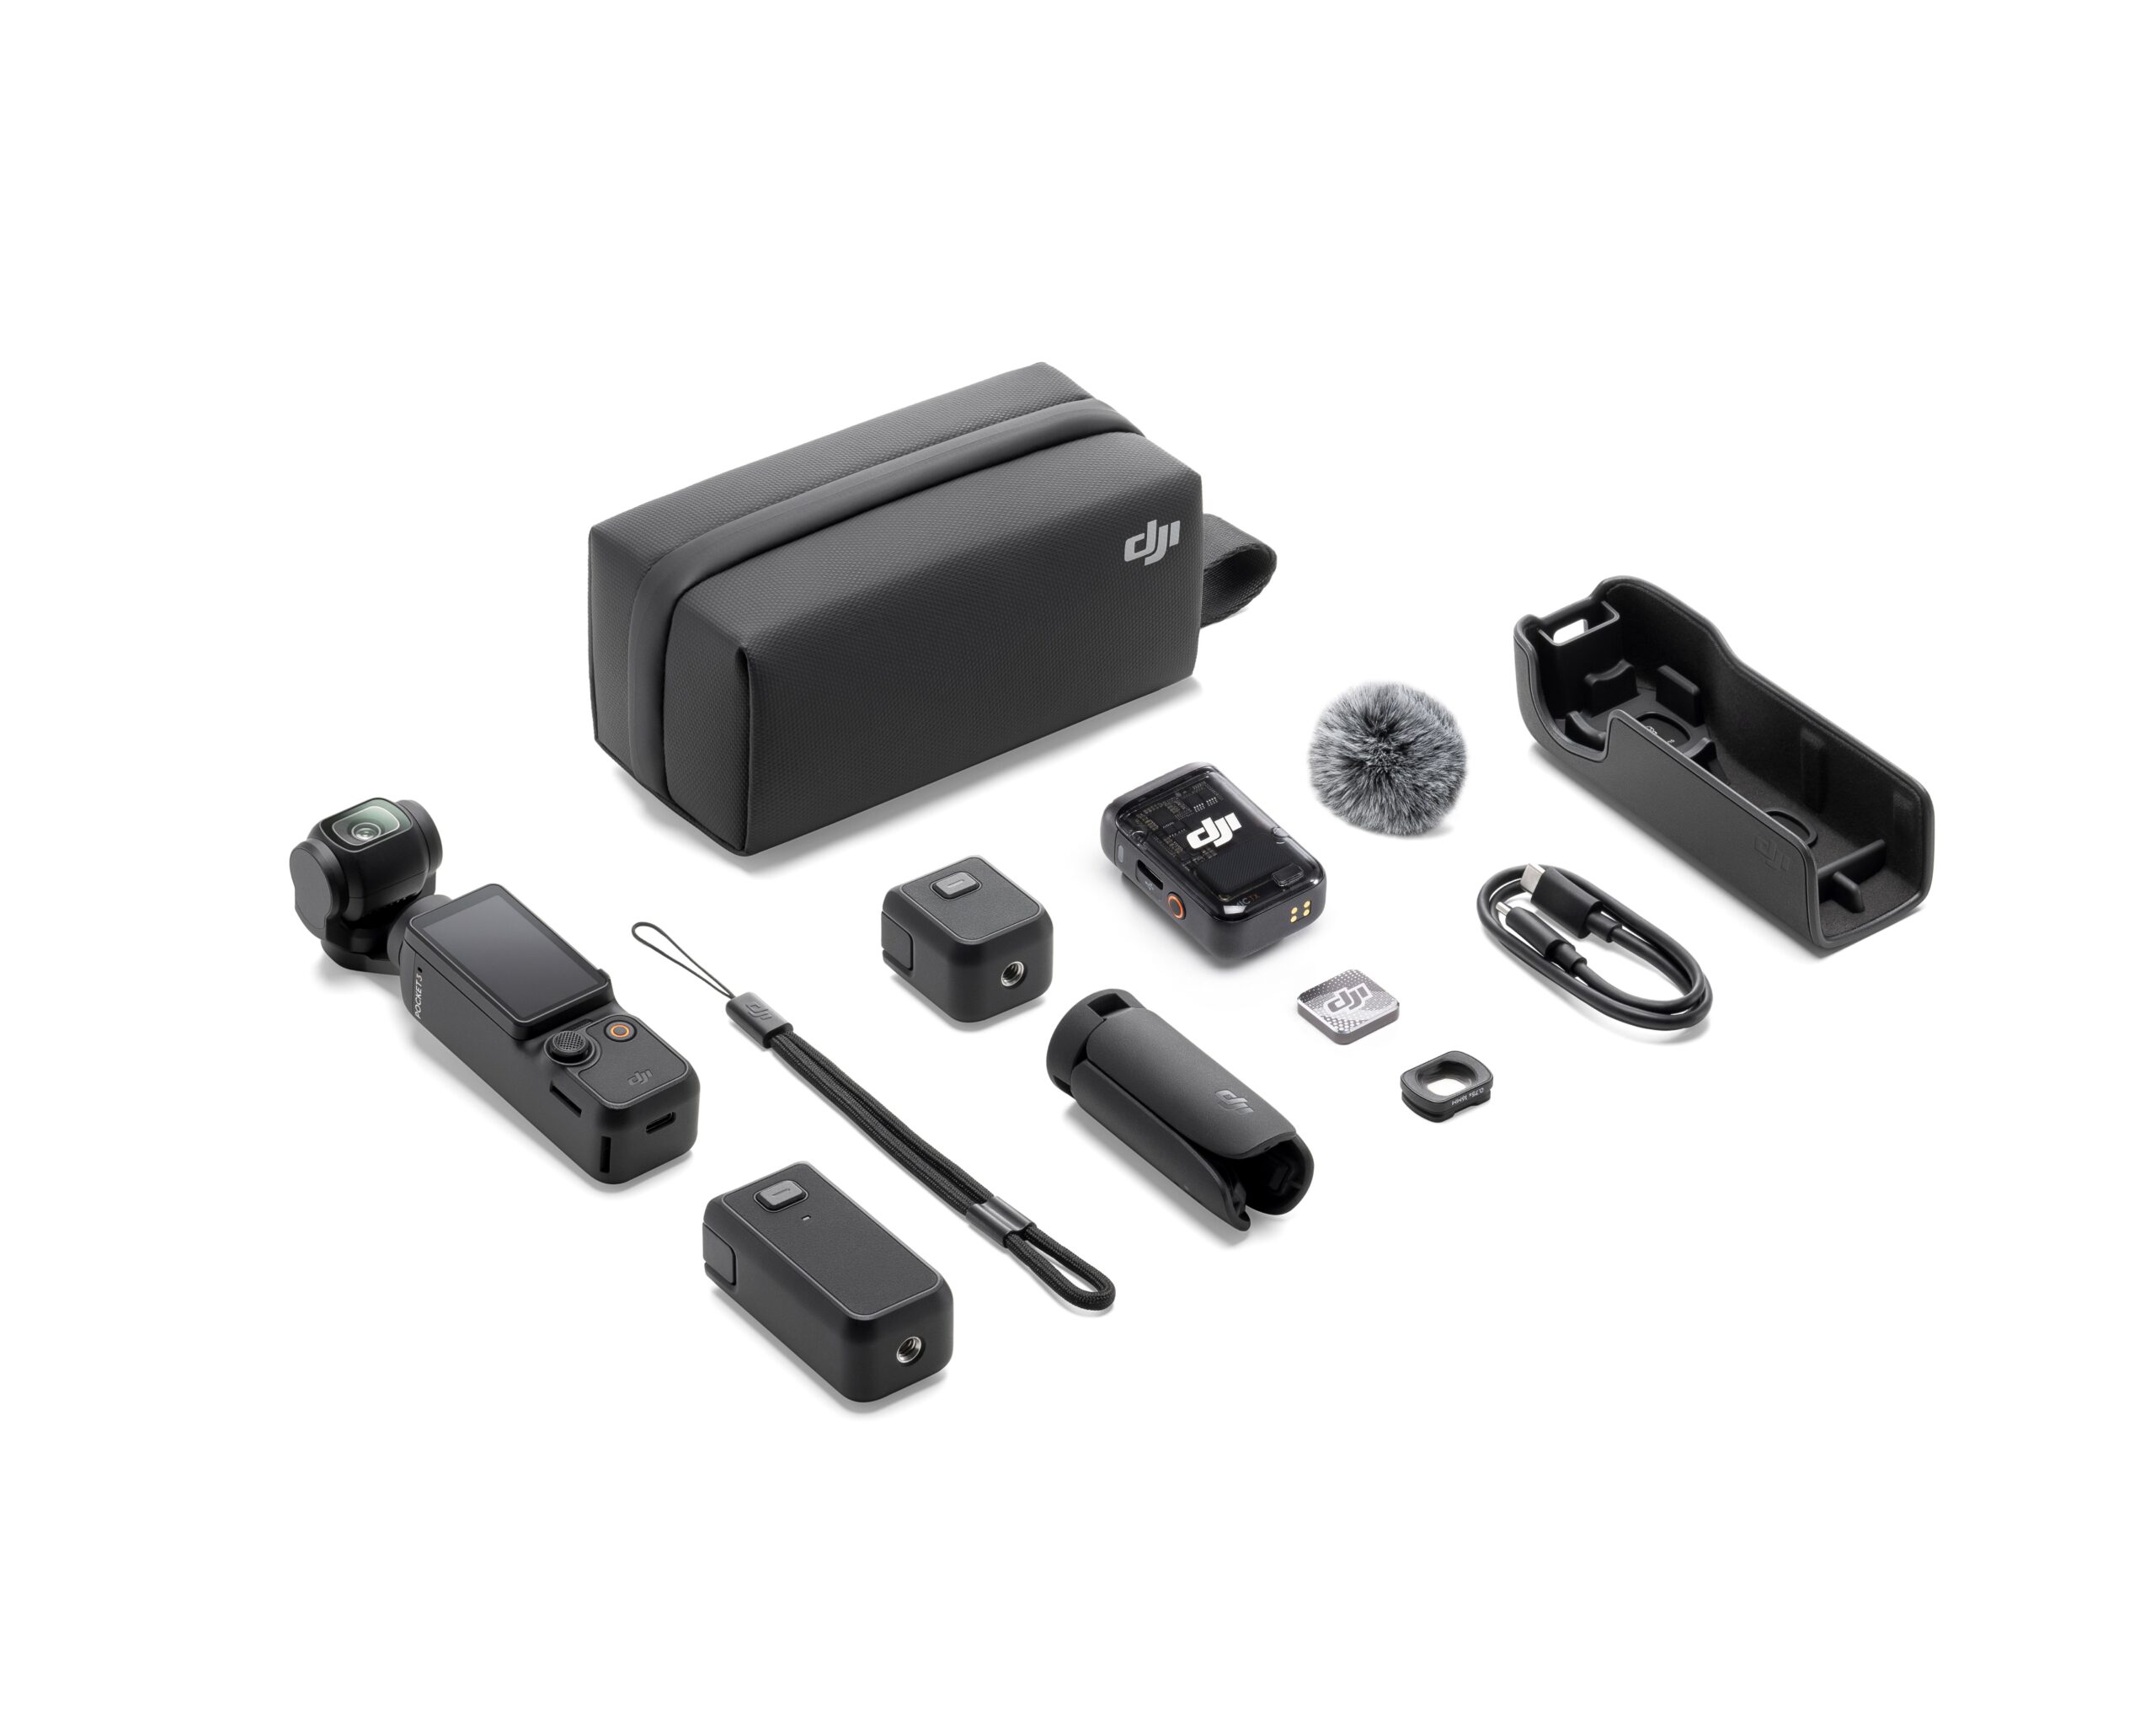 Osmo Pocket 3: New images leak of DJI's next handheld mini camera -   News